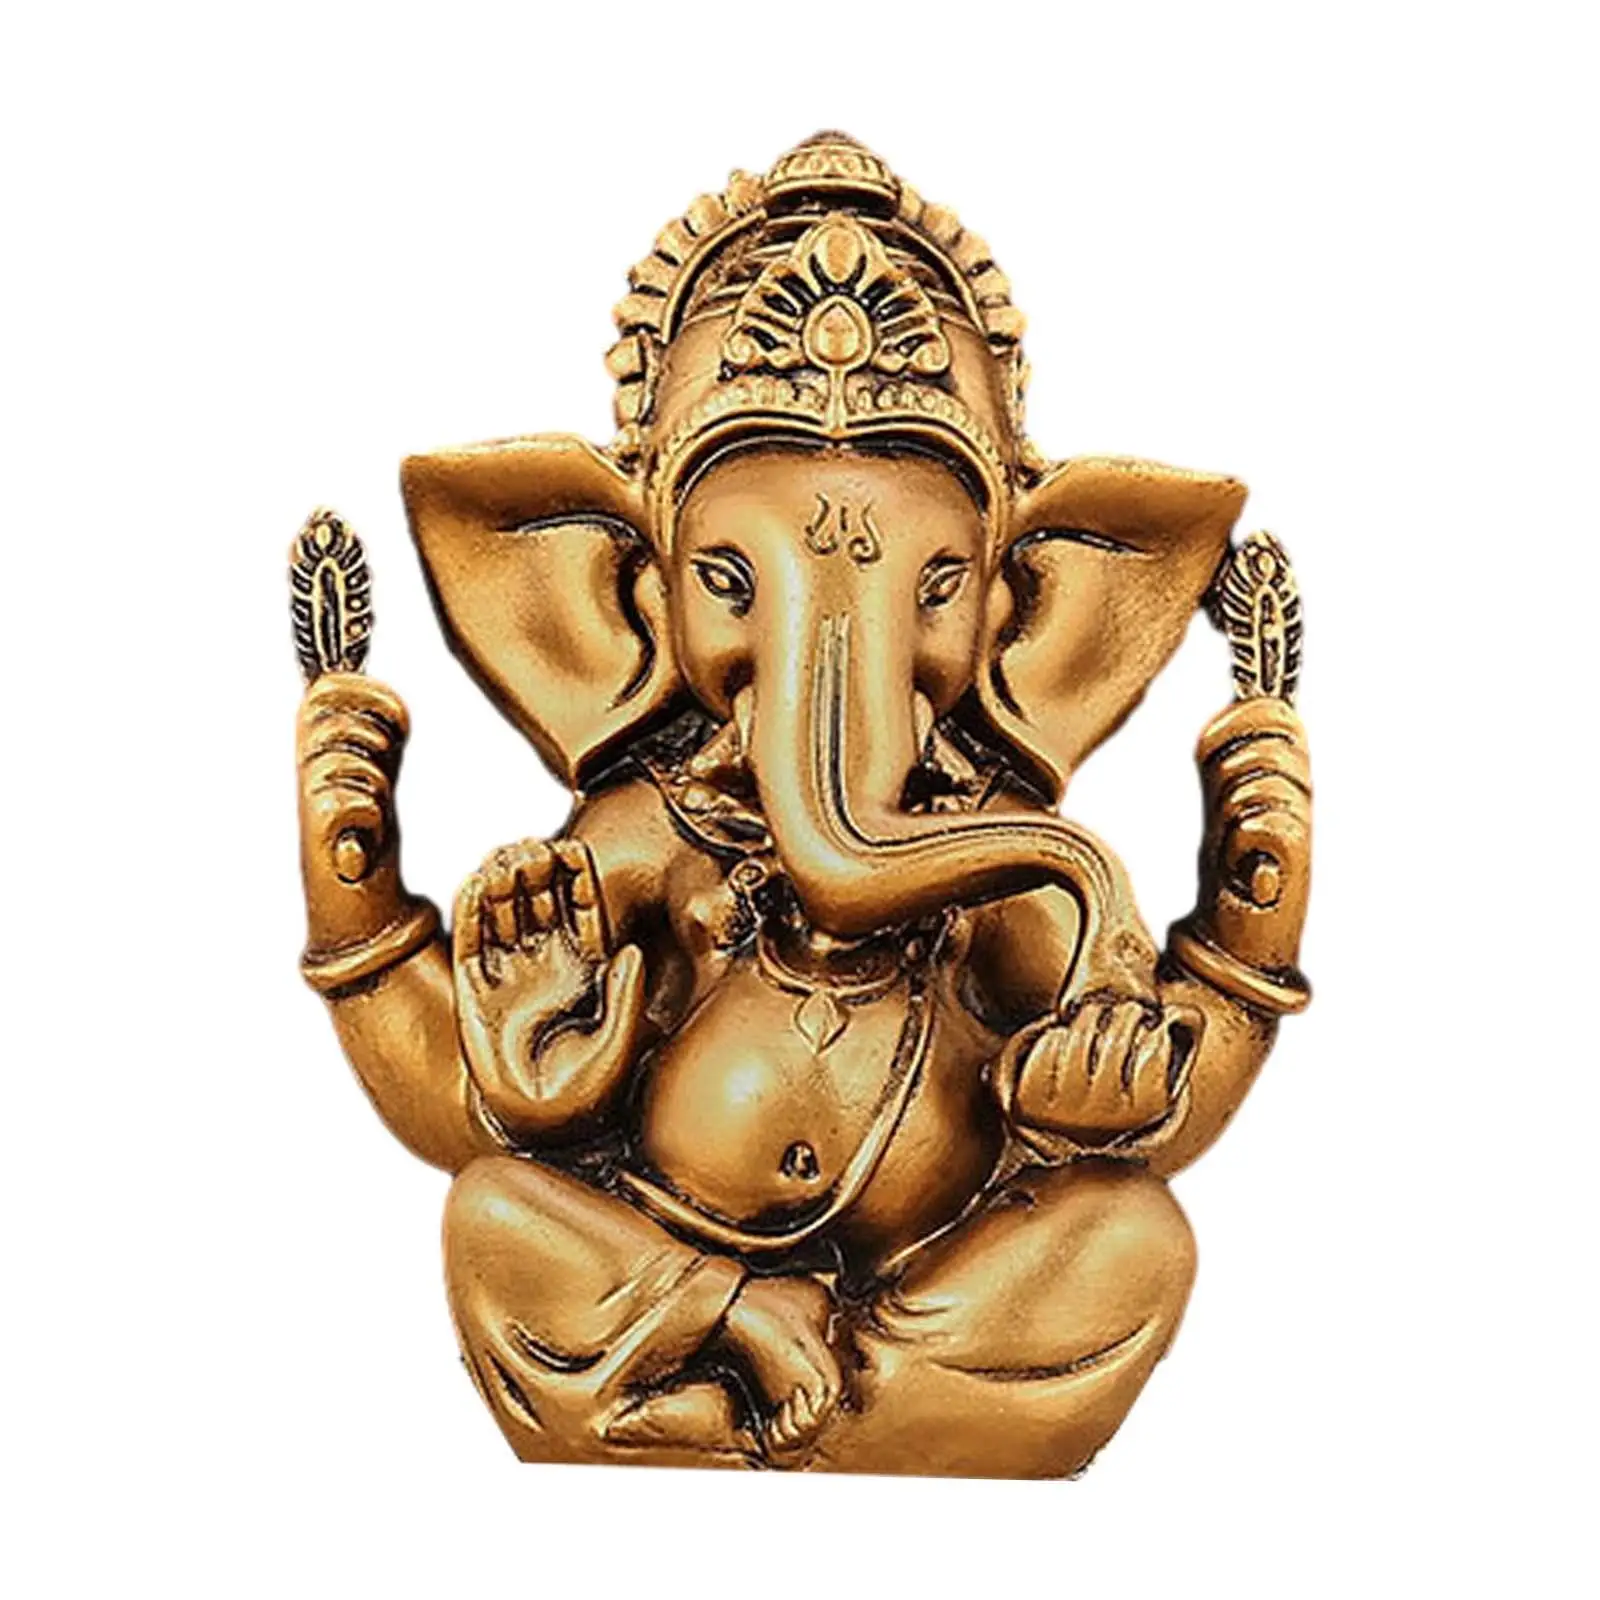 Indian Ganesha Figurine Hindu God Decorative Ganesh Statue Elephant Buddha Statue for Office Desk Car Dashboard Shelf Home Decor